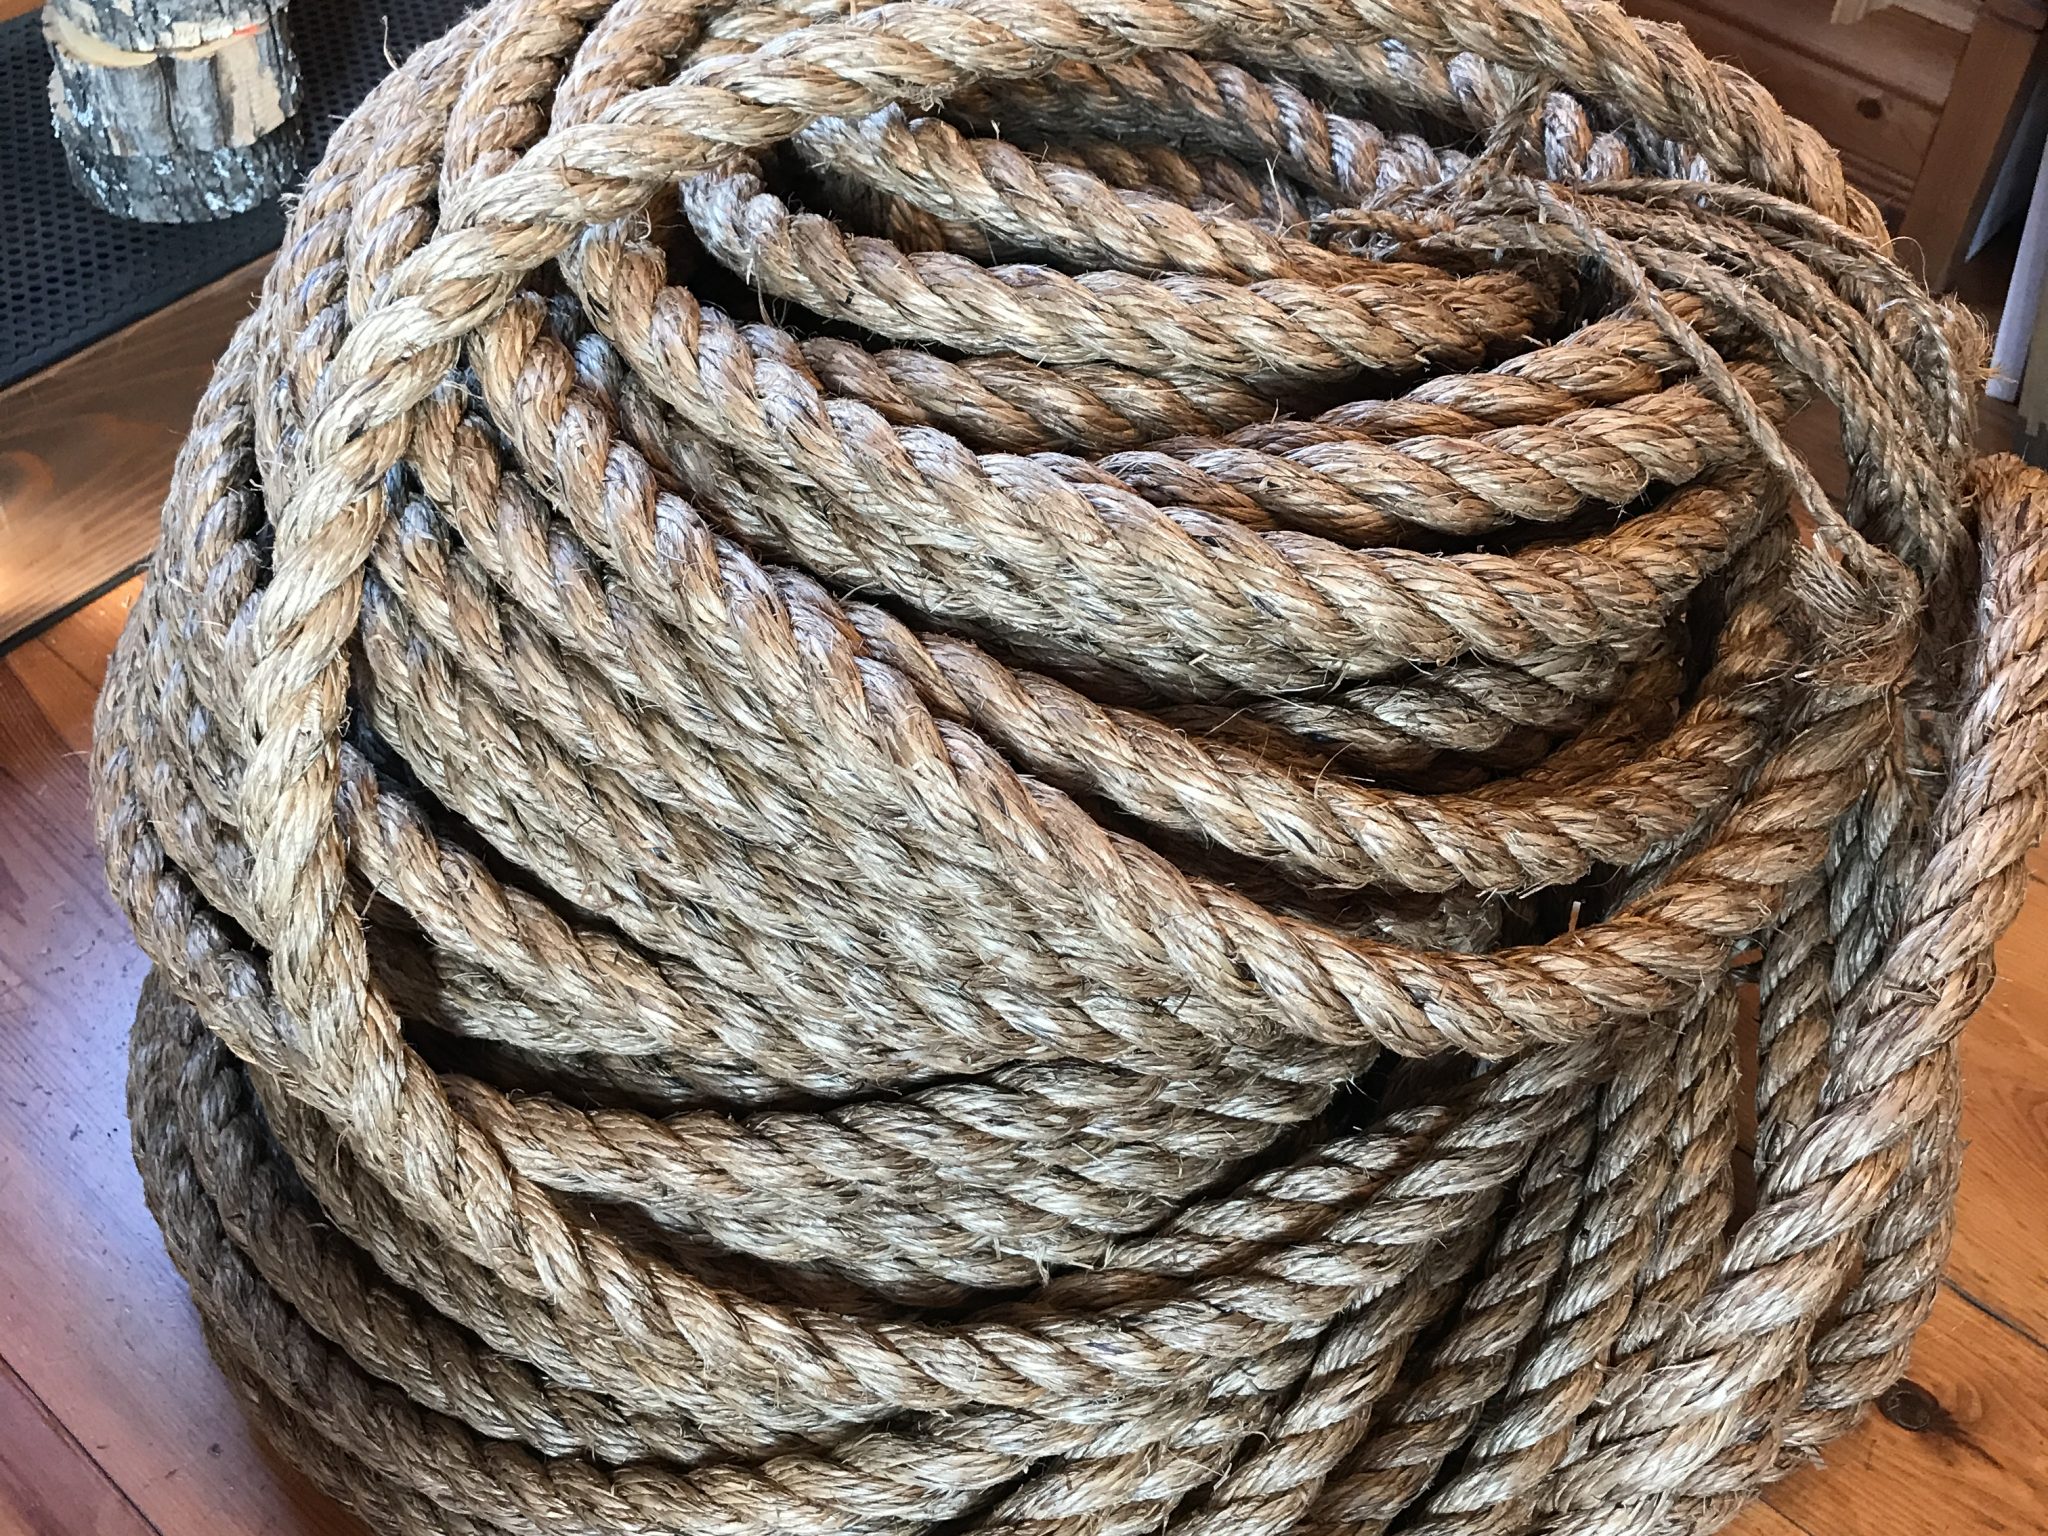 Rope molding industrial naval maritime seaside ship sailor pine original idea